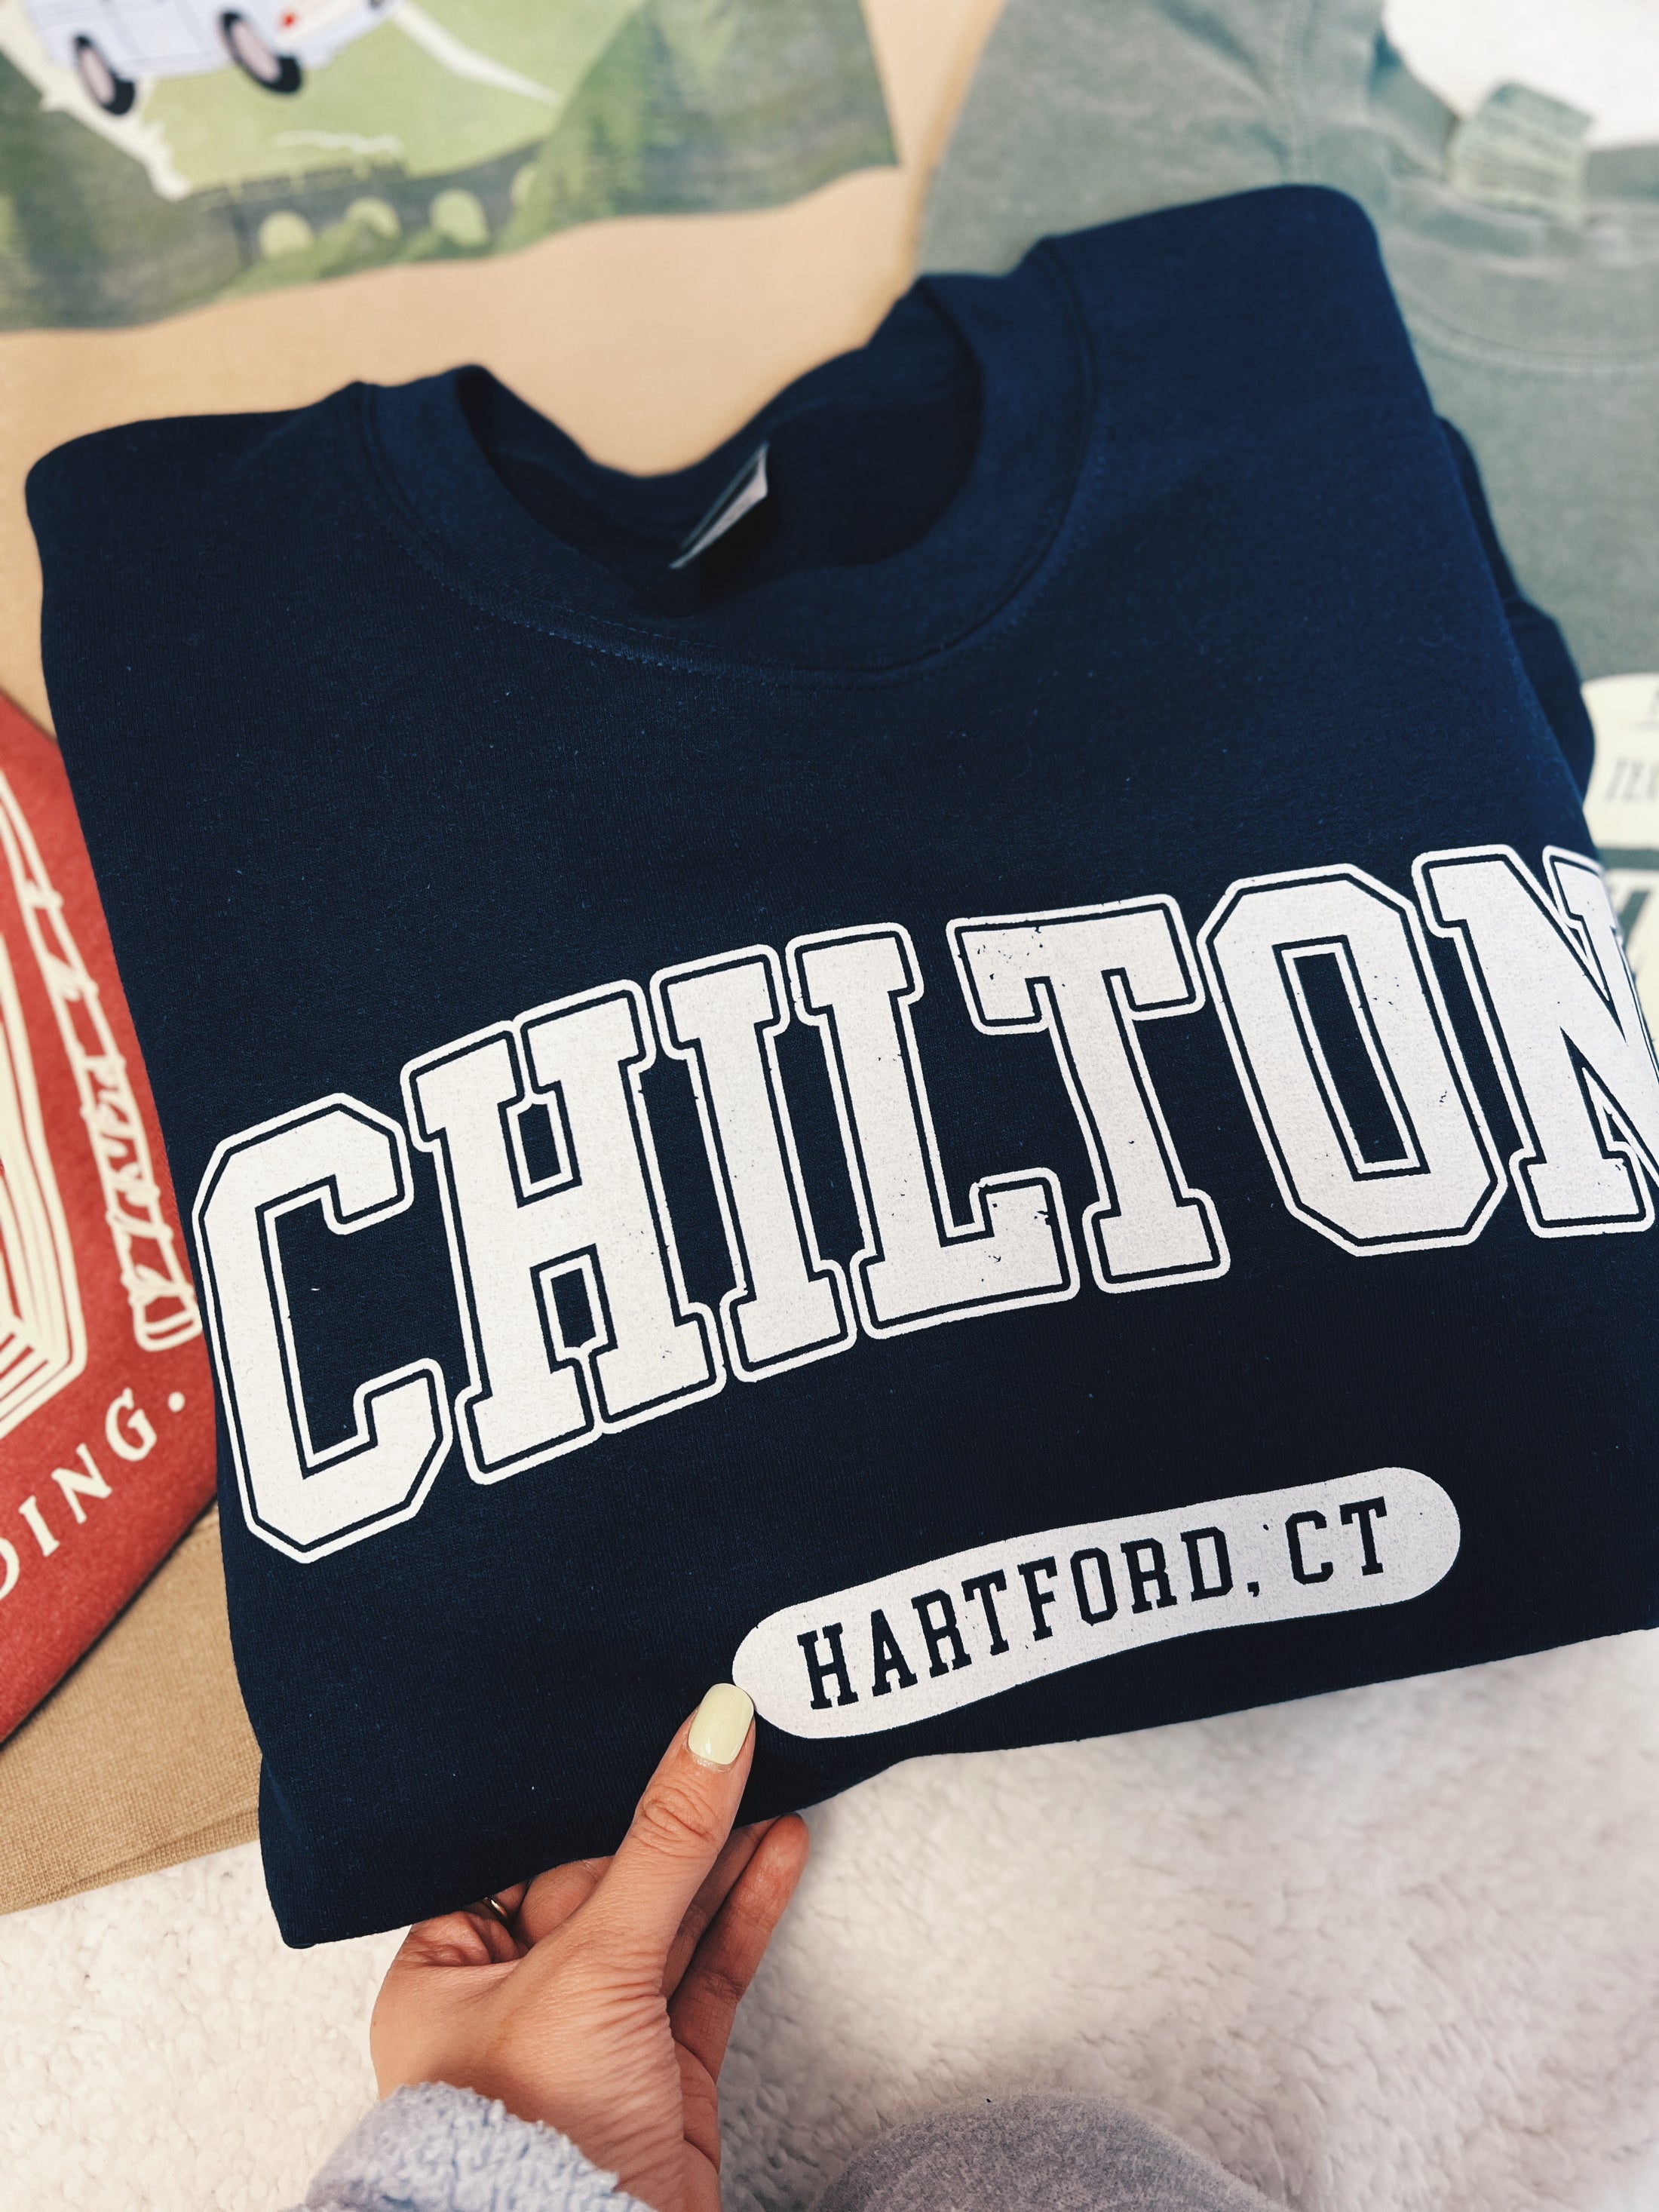 Chilton Academy Crewneck Sweatshirt